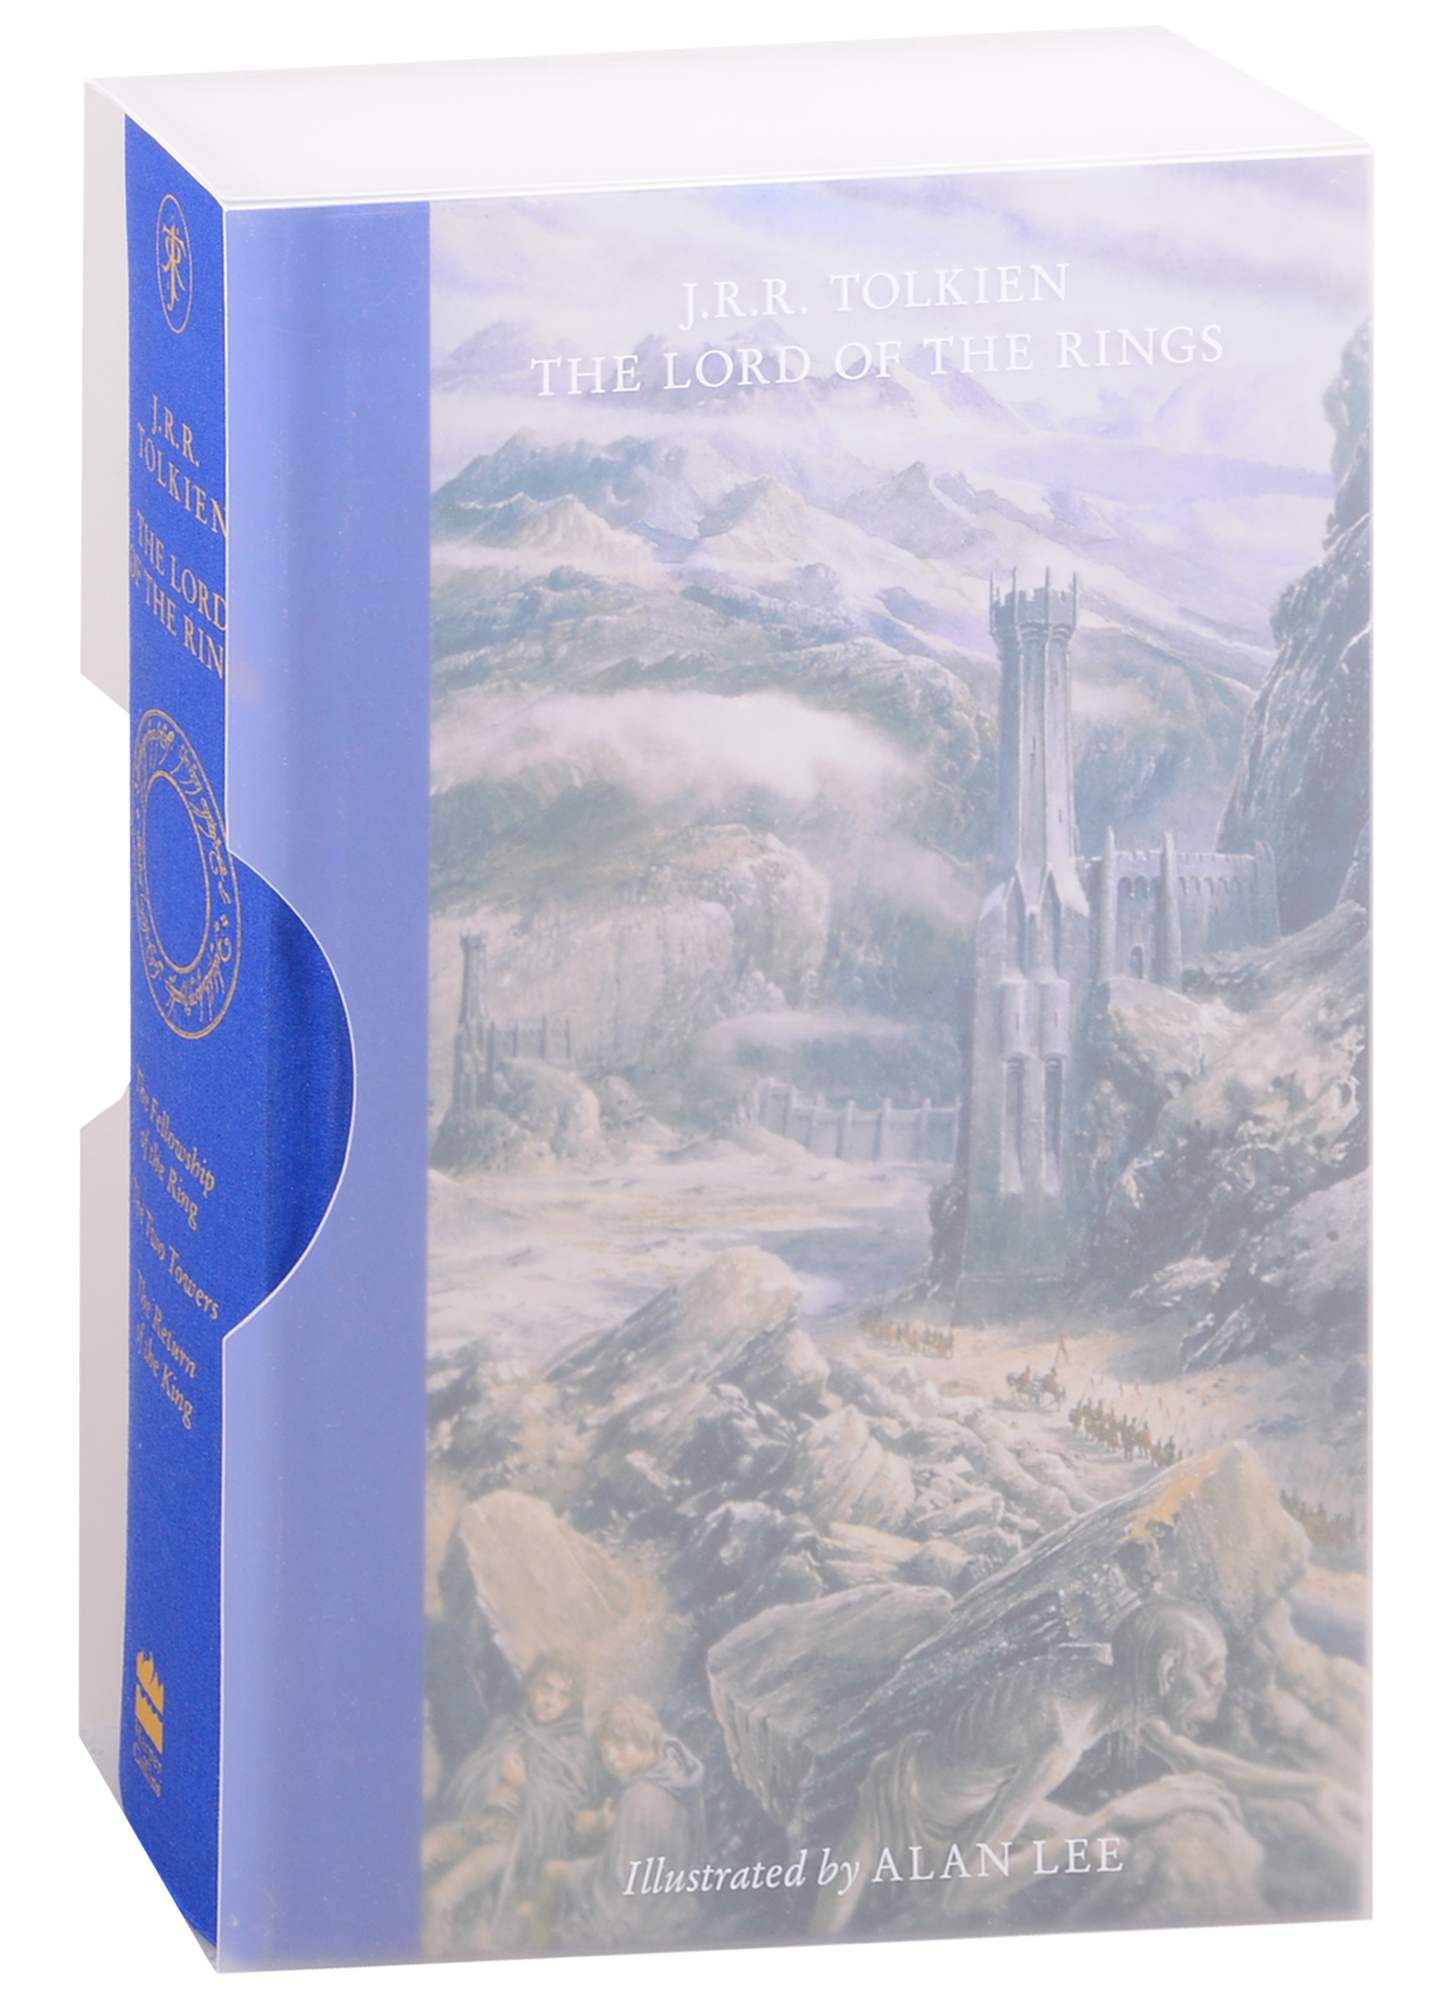 Толкин Джон Рональд Руэл Lord of the Rings box цена и фото